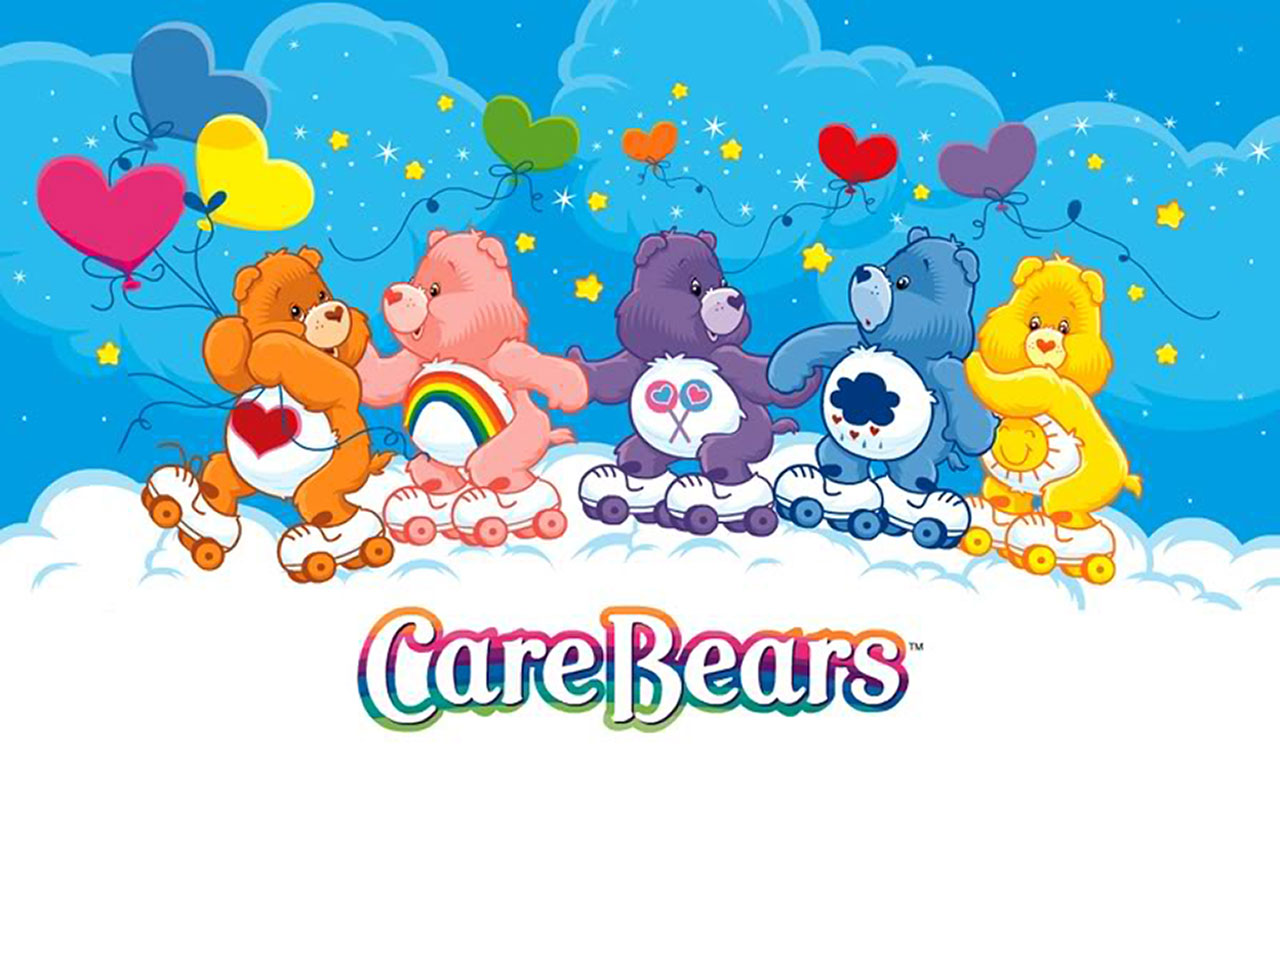 1485731 Hintergrundbild herunterladen fernsehserien, tragen, funshine bear (sorgebären), grumpy bear (care bears), tenderheart bär (care bears), die glücksbärchis - Bildschirmschoner und Bilder kostenlos